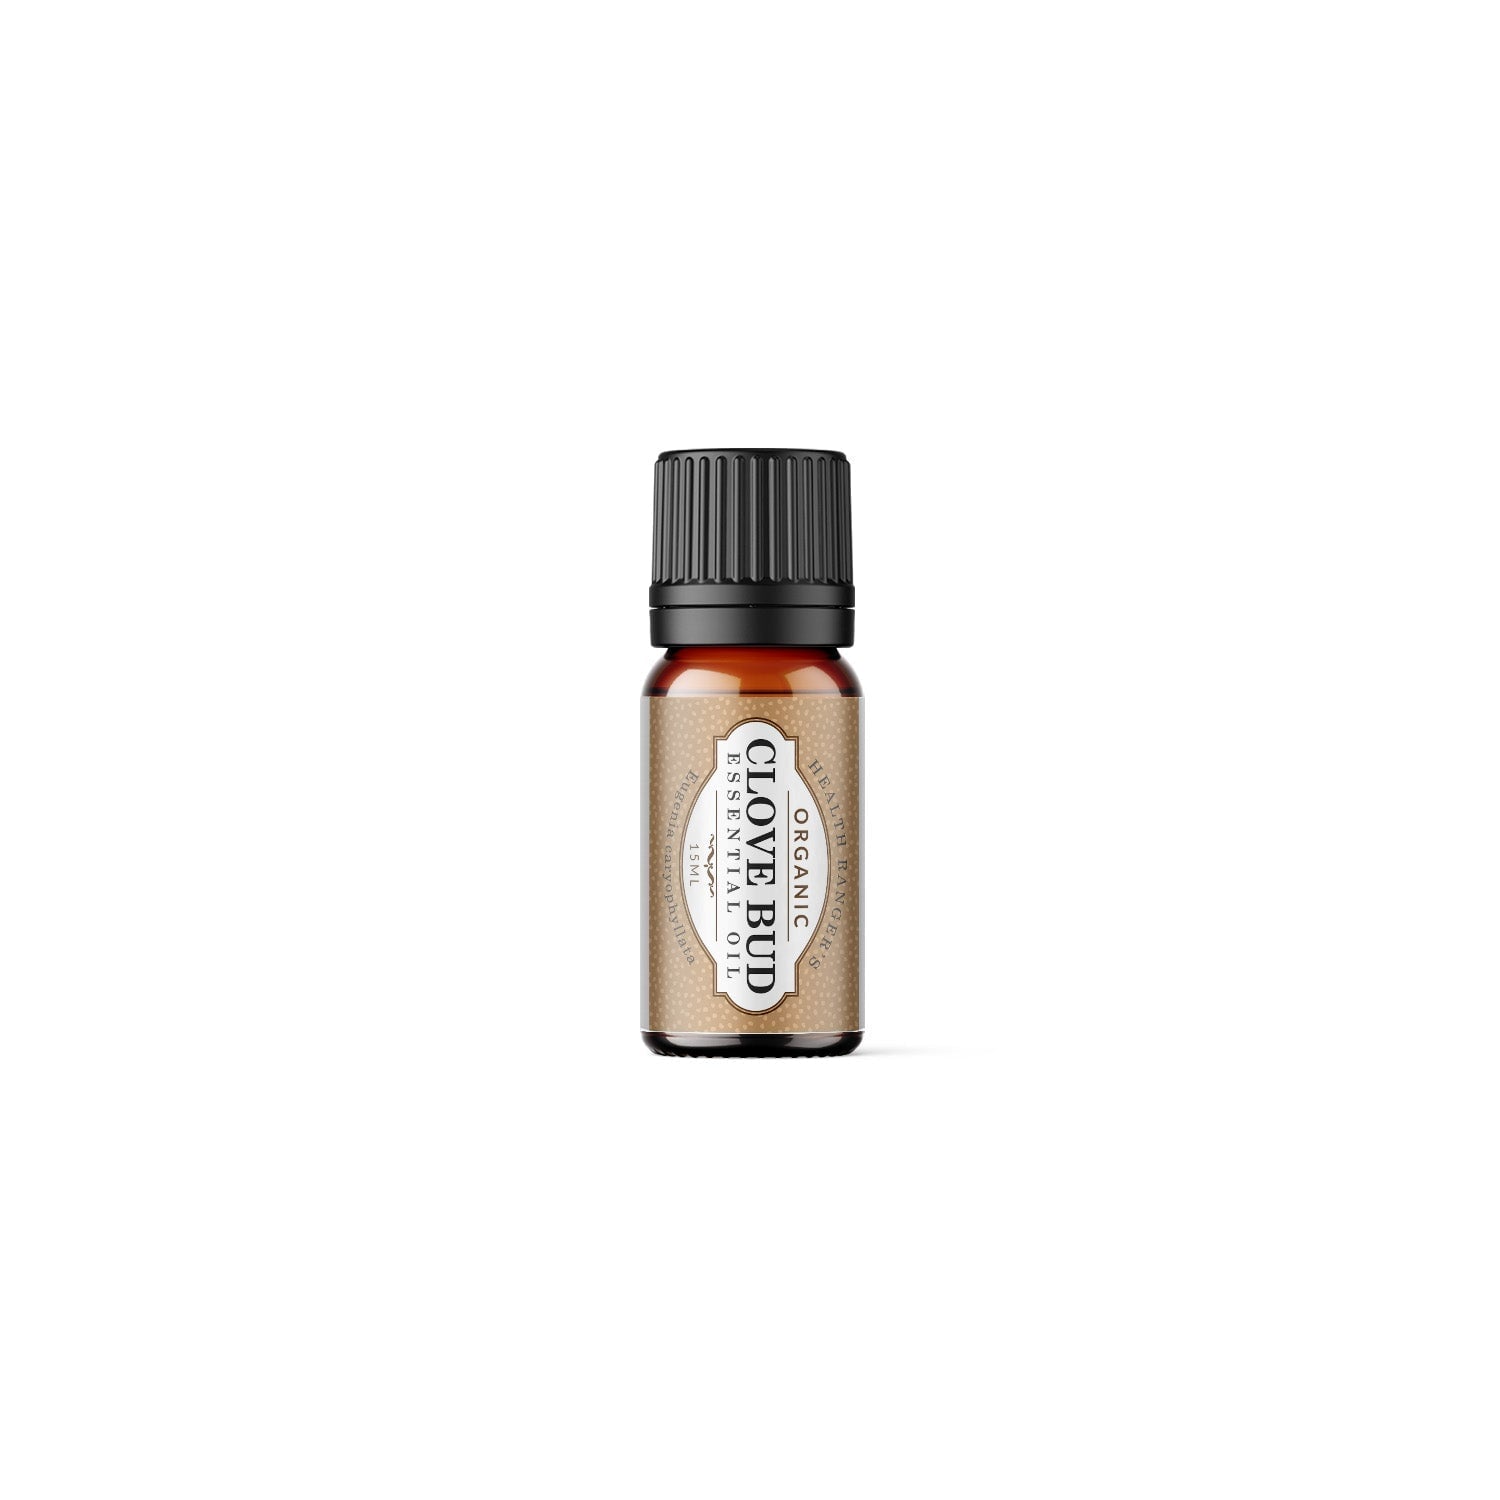 Organic Clove Bud Essential Oil 0.5oz (15ml) New Arrivals Brighteon Store 